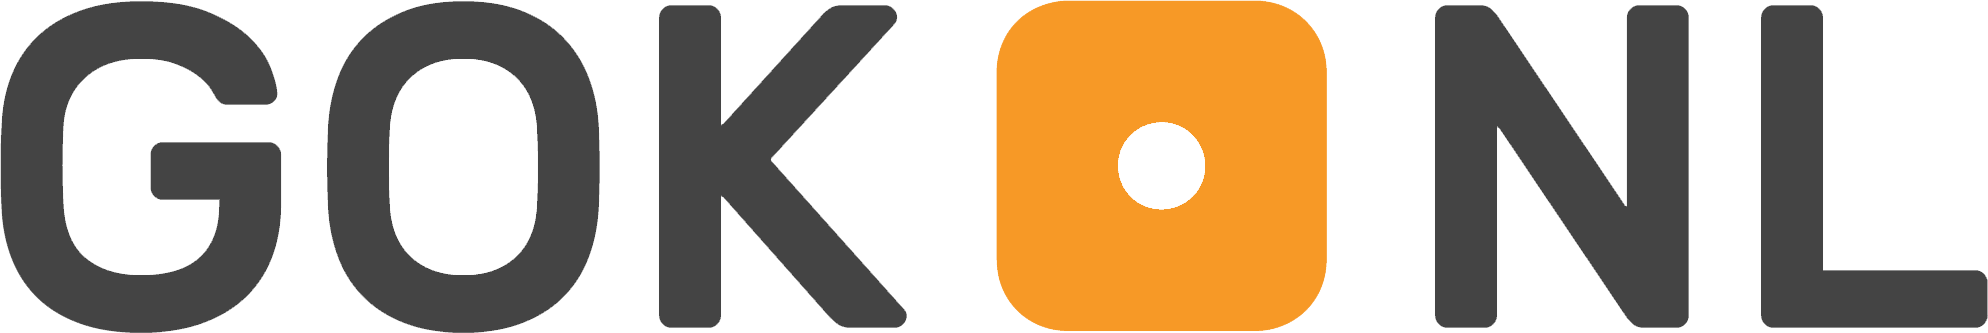 Gok.nl logo